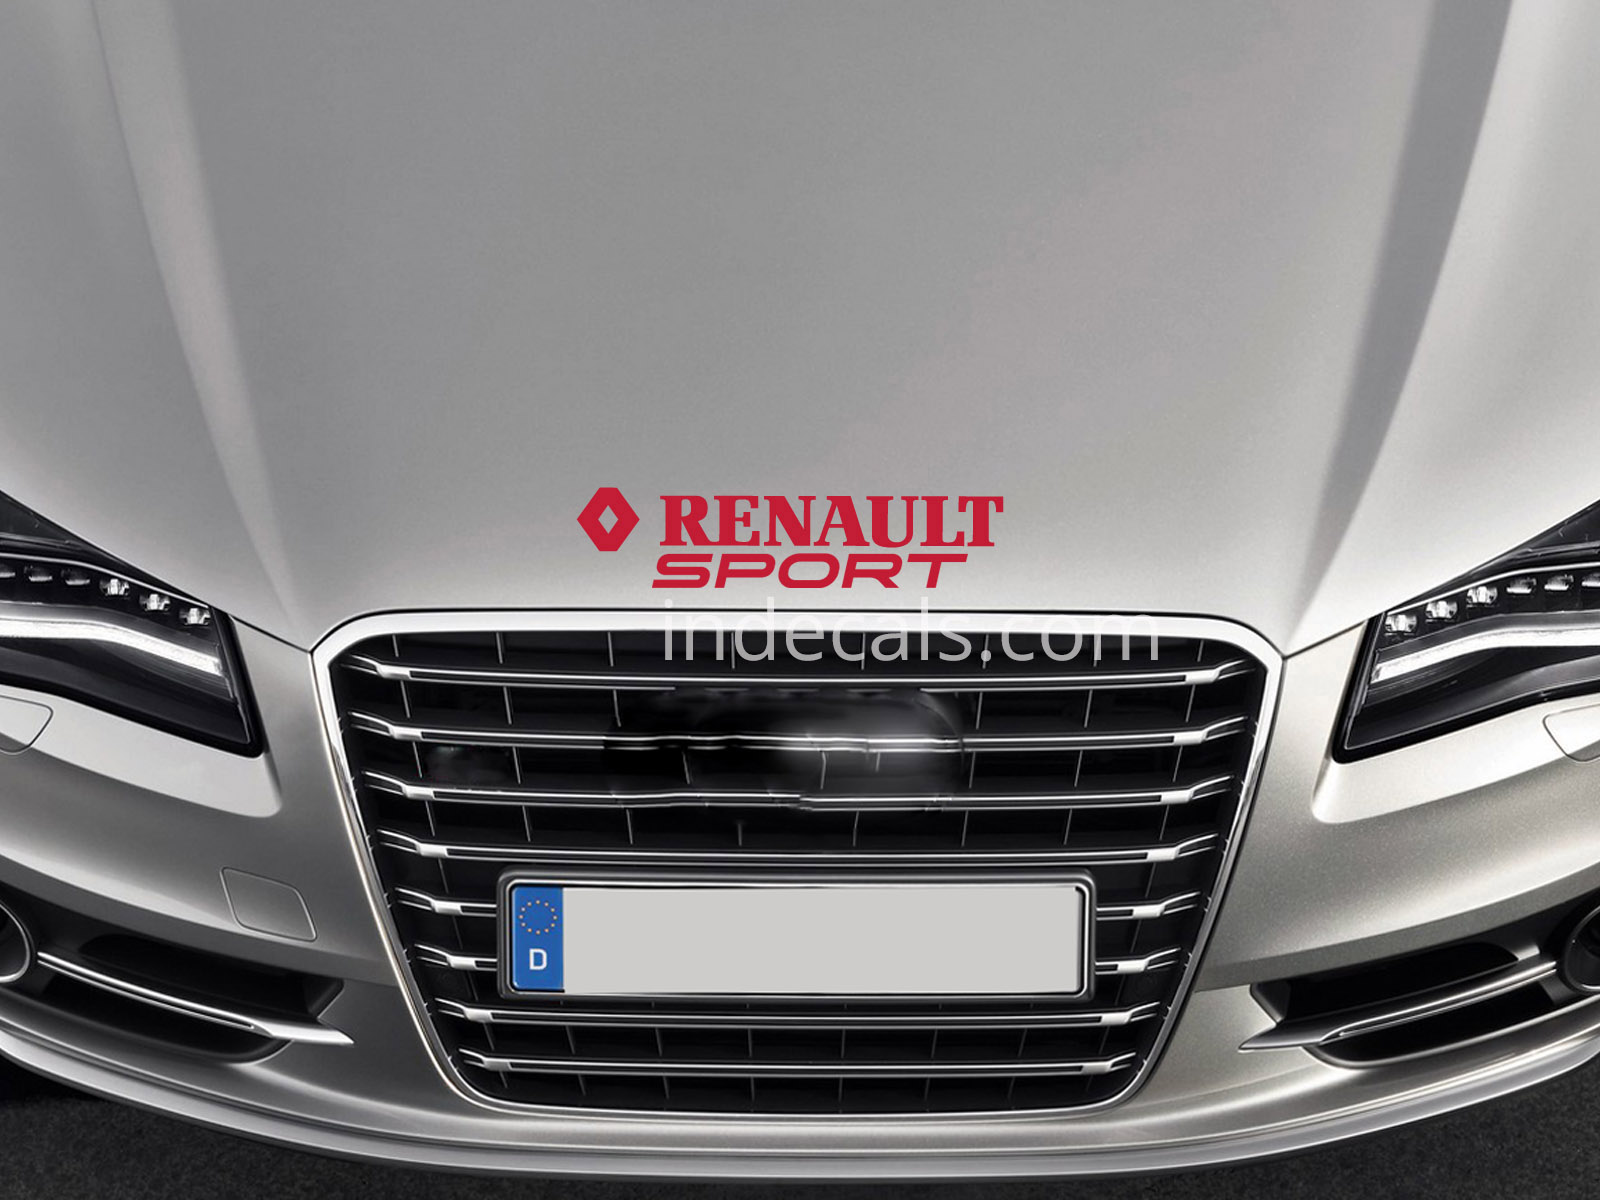 1 x Renault Sport Sticker for Bonnet - Red